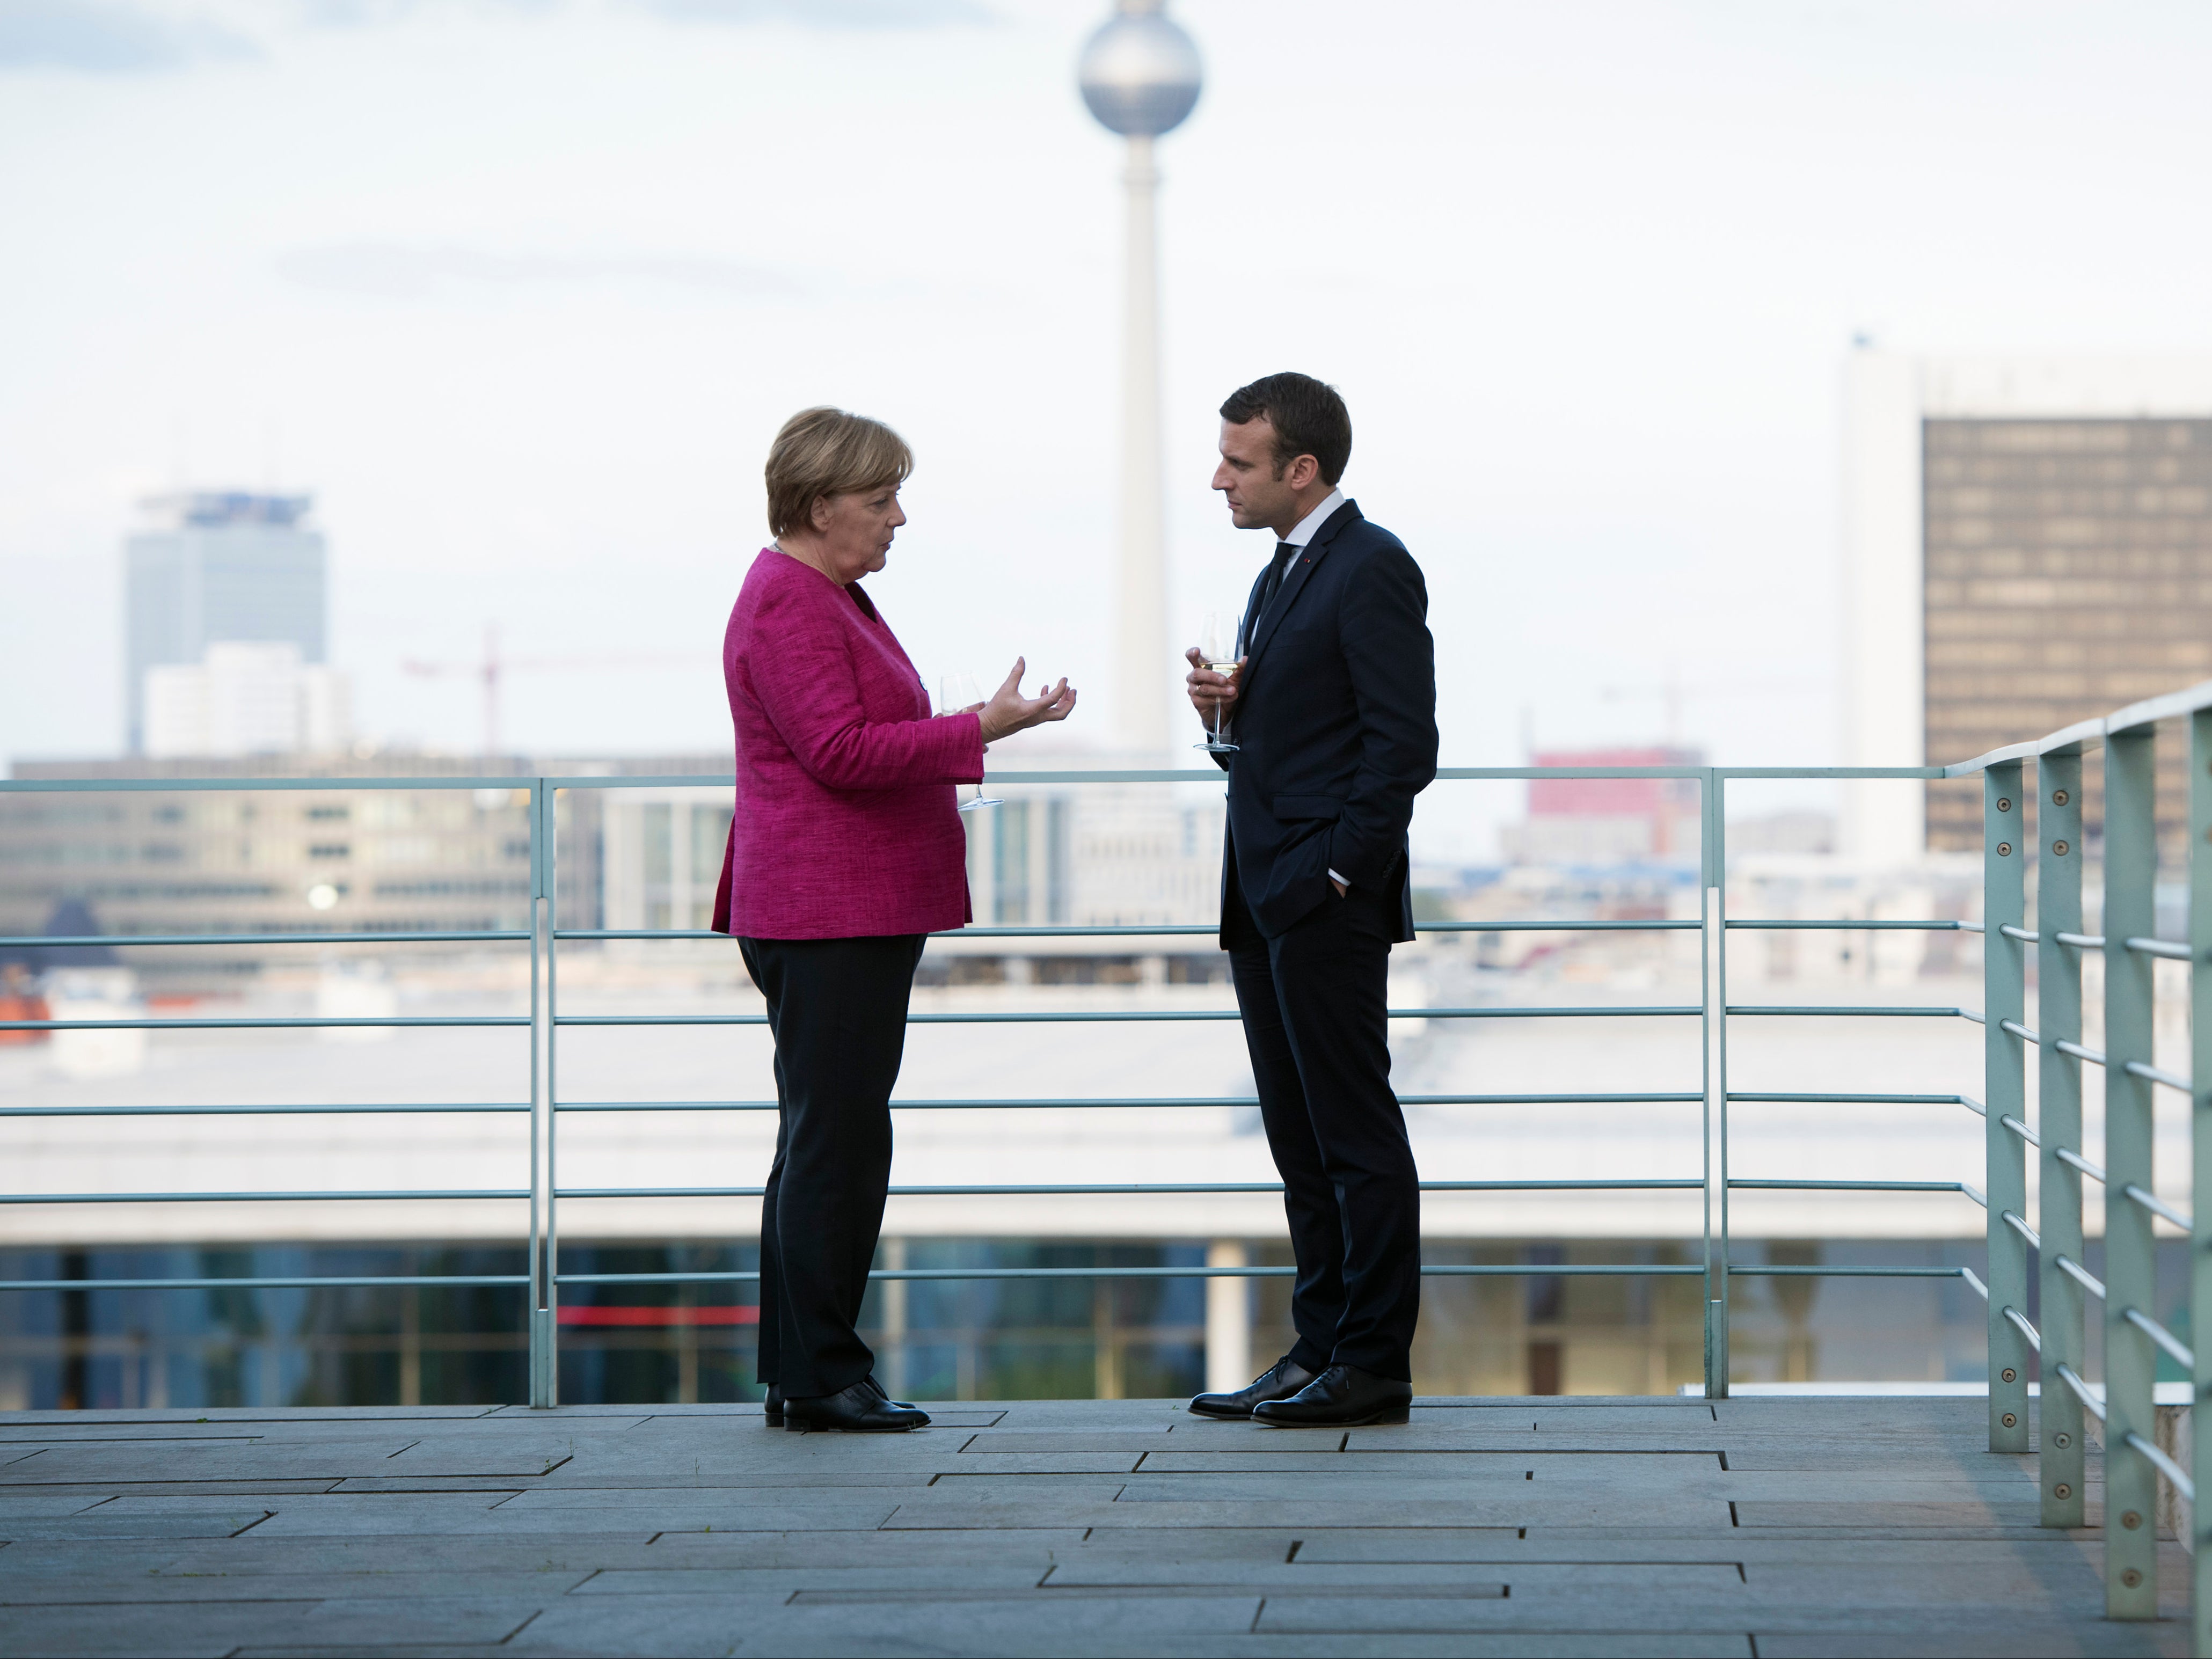 Where Angela Merkel and Emmanuel Macron agree is on the inviolability of the sacred single market